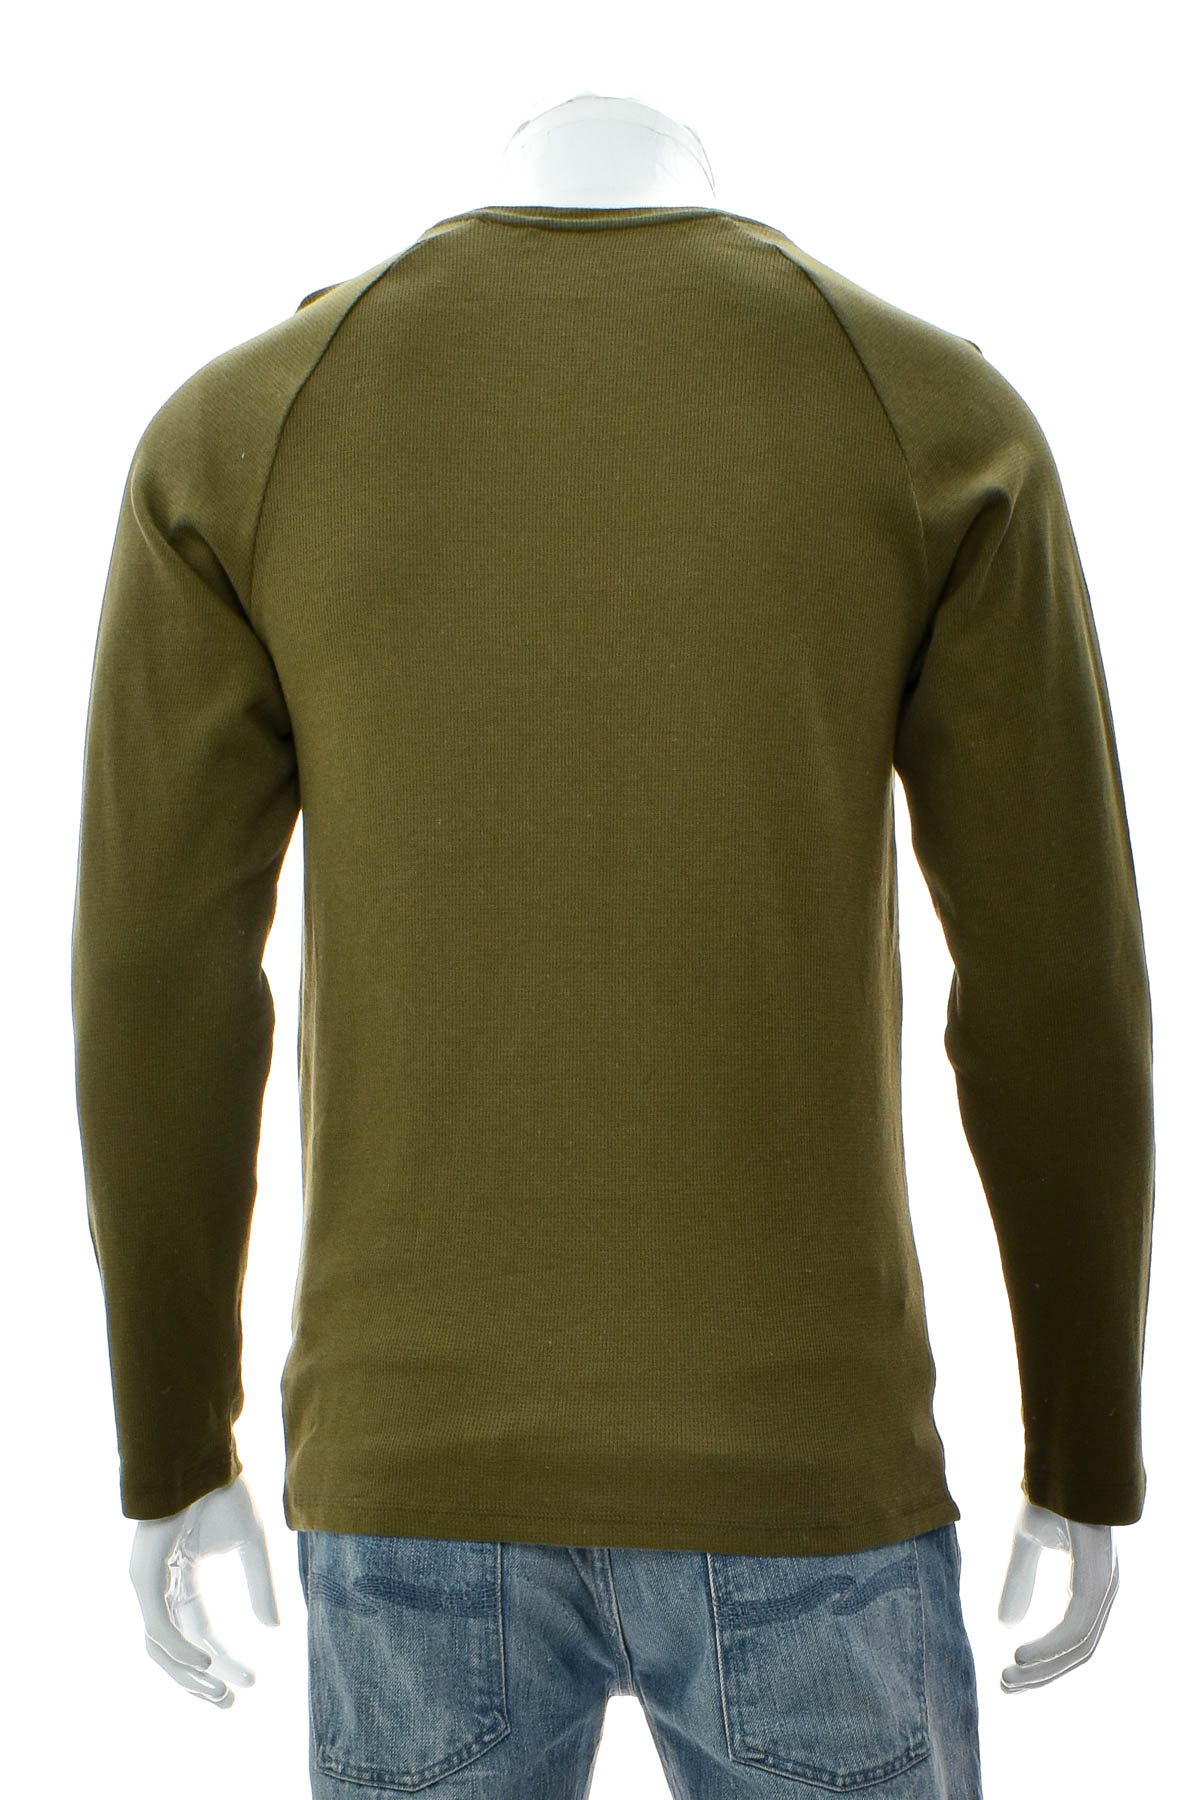 Men's sweater - Anko - 1